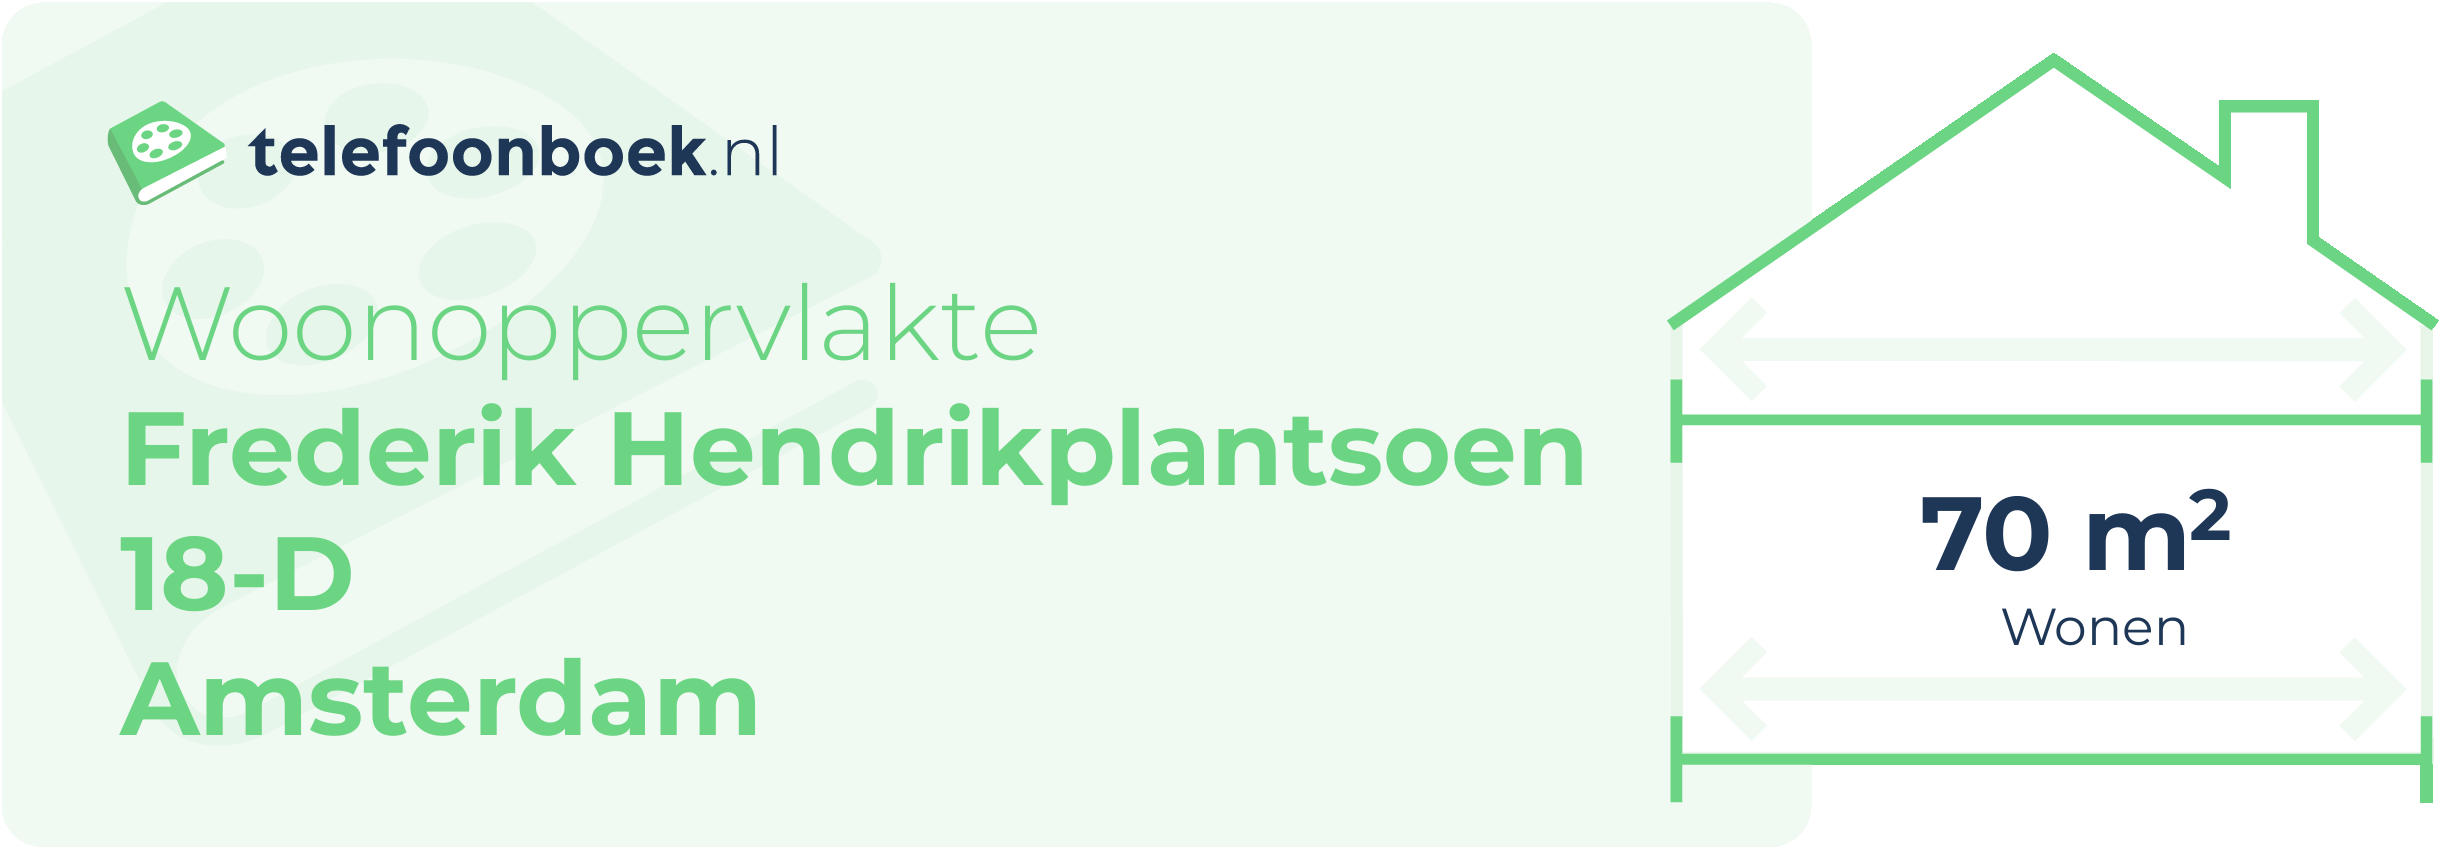 Woonoppervlakte Frederik Hendrikplantsoen 18-D Amsterdam